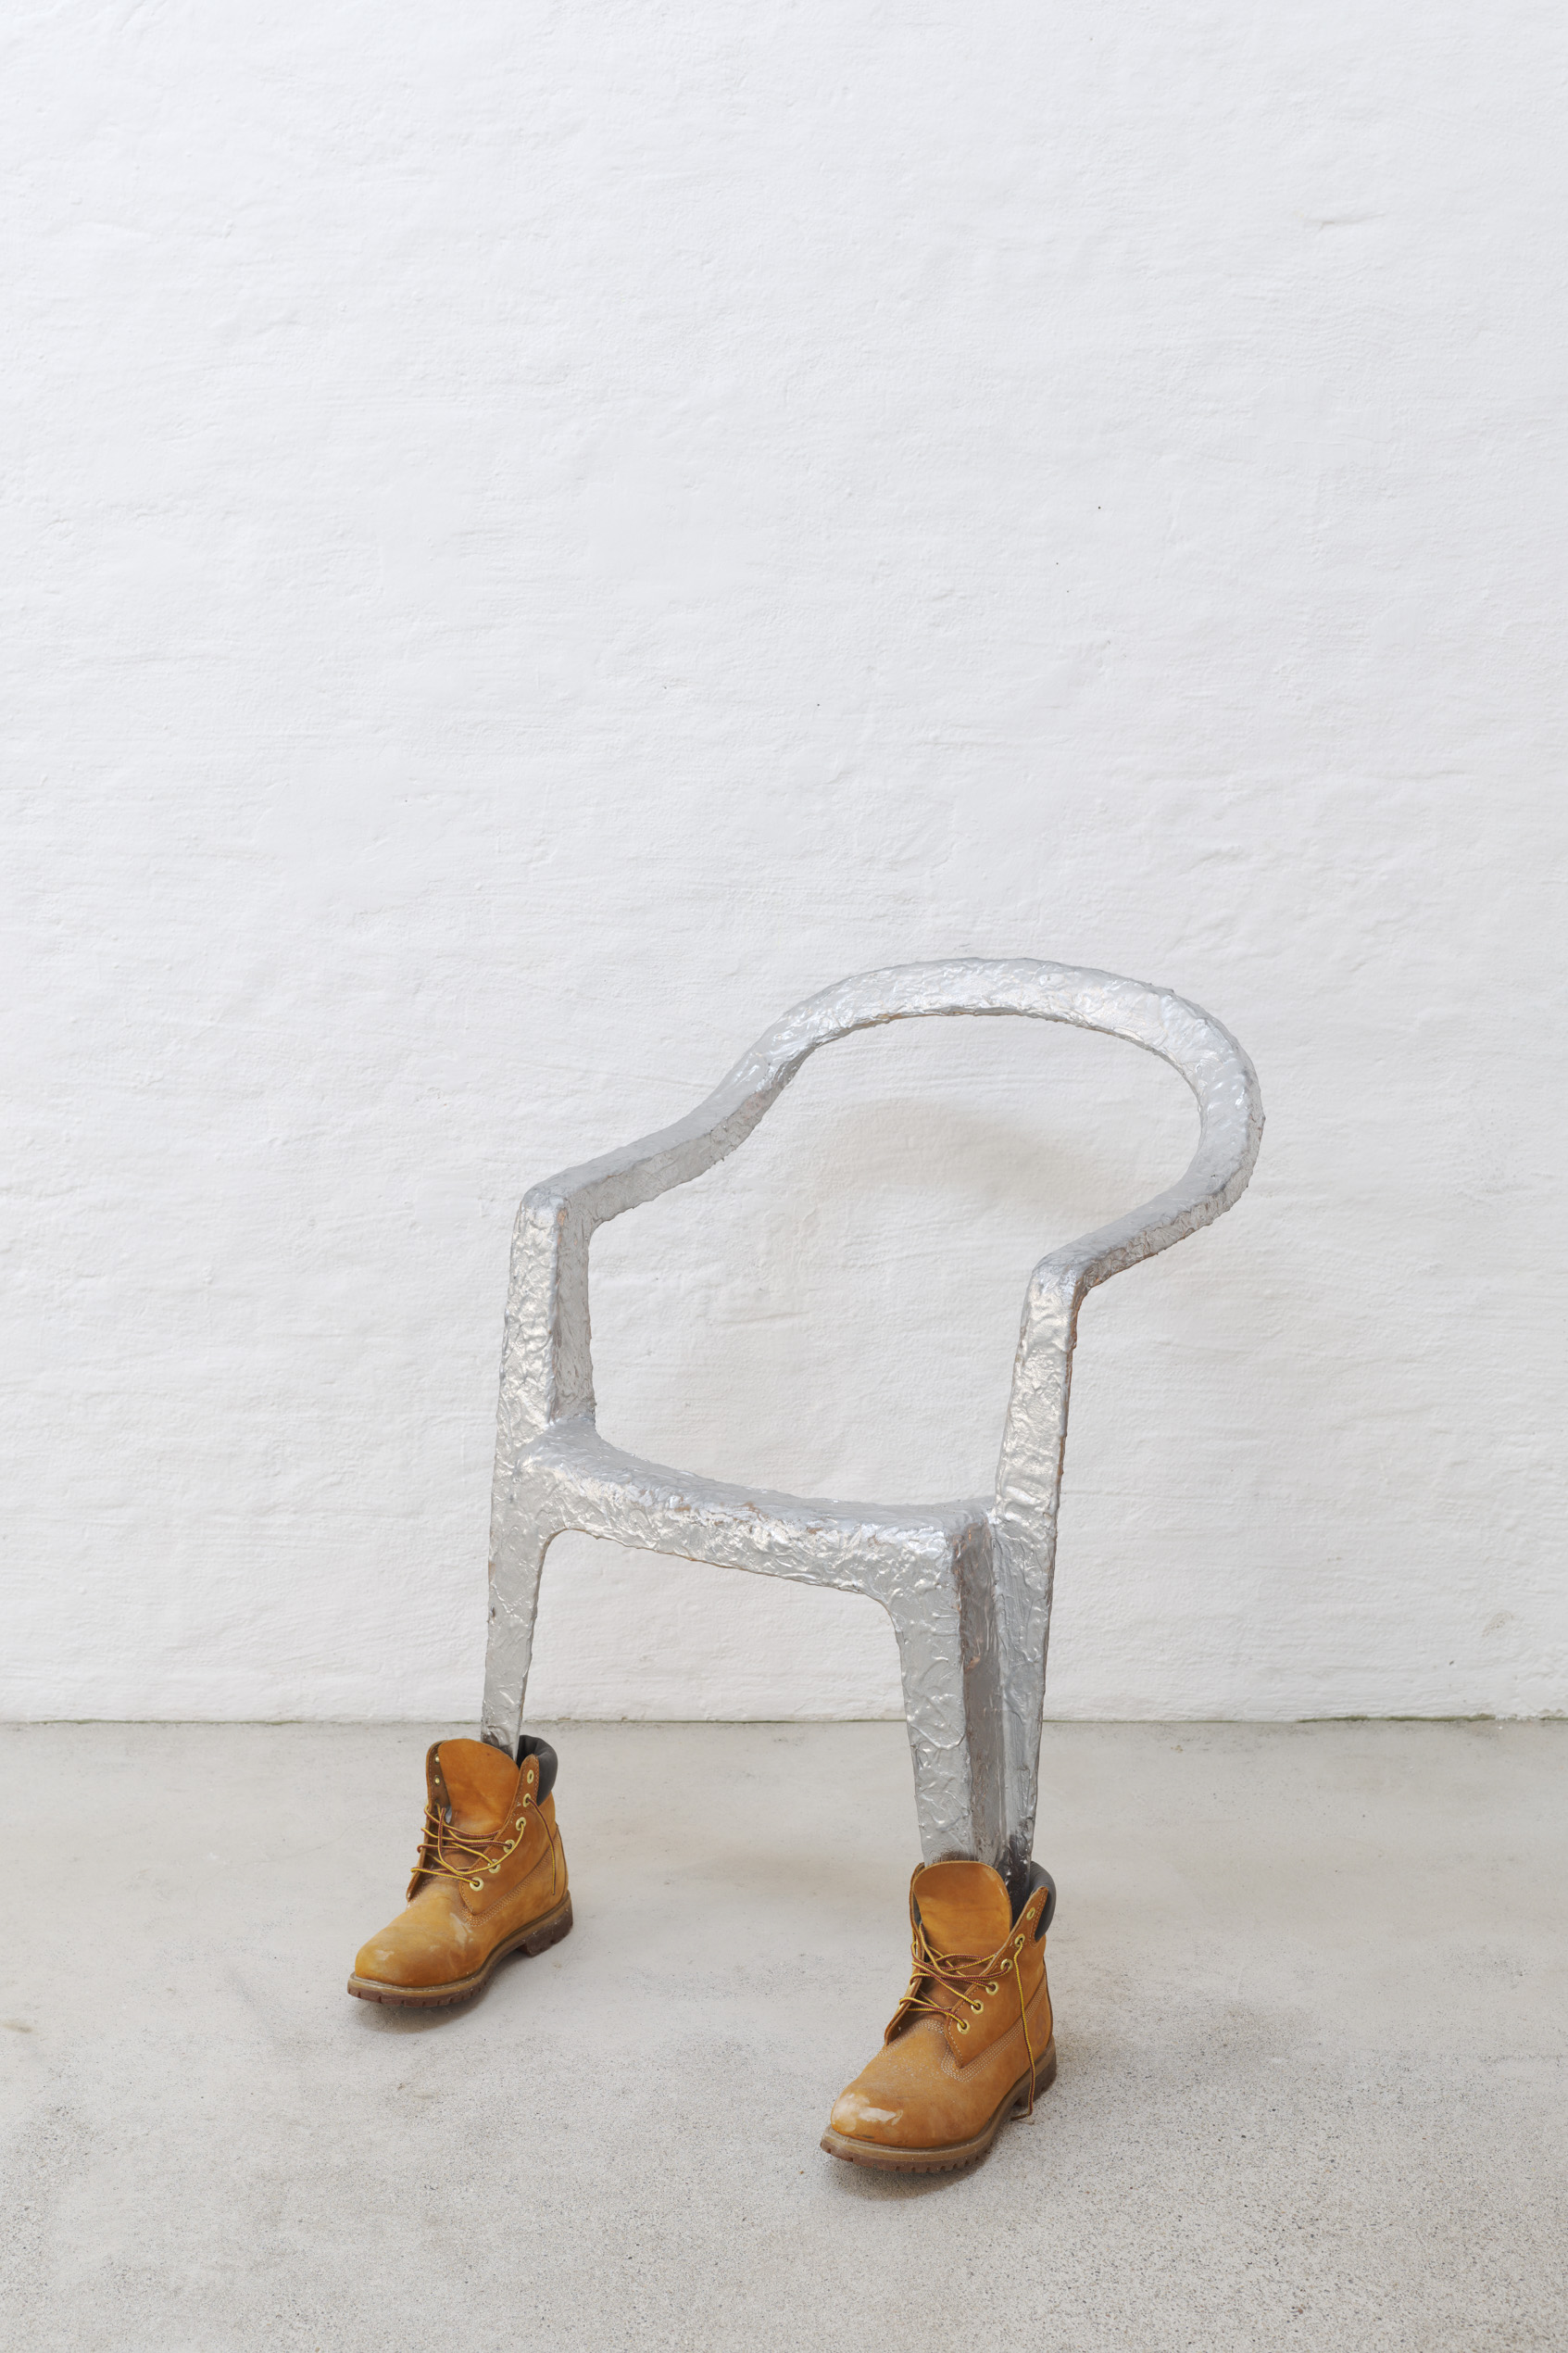 Lindsay Lawson, Jan Jansen, 2018, garden chair, Timberlands, latex, acrylic